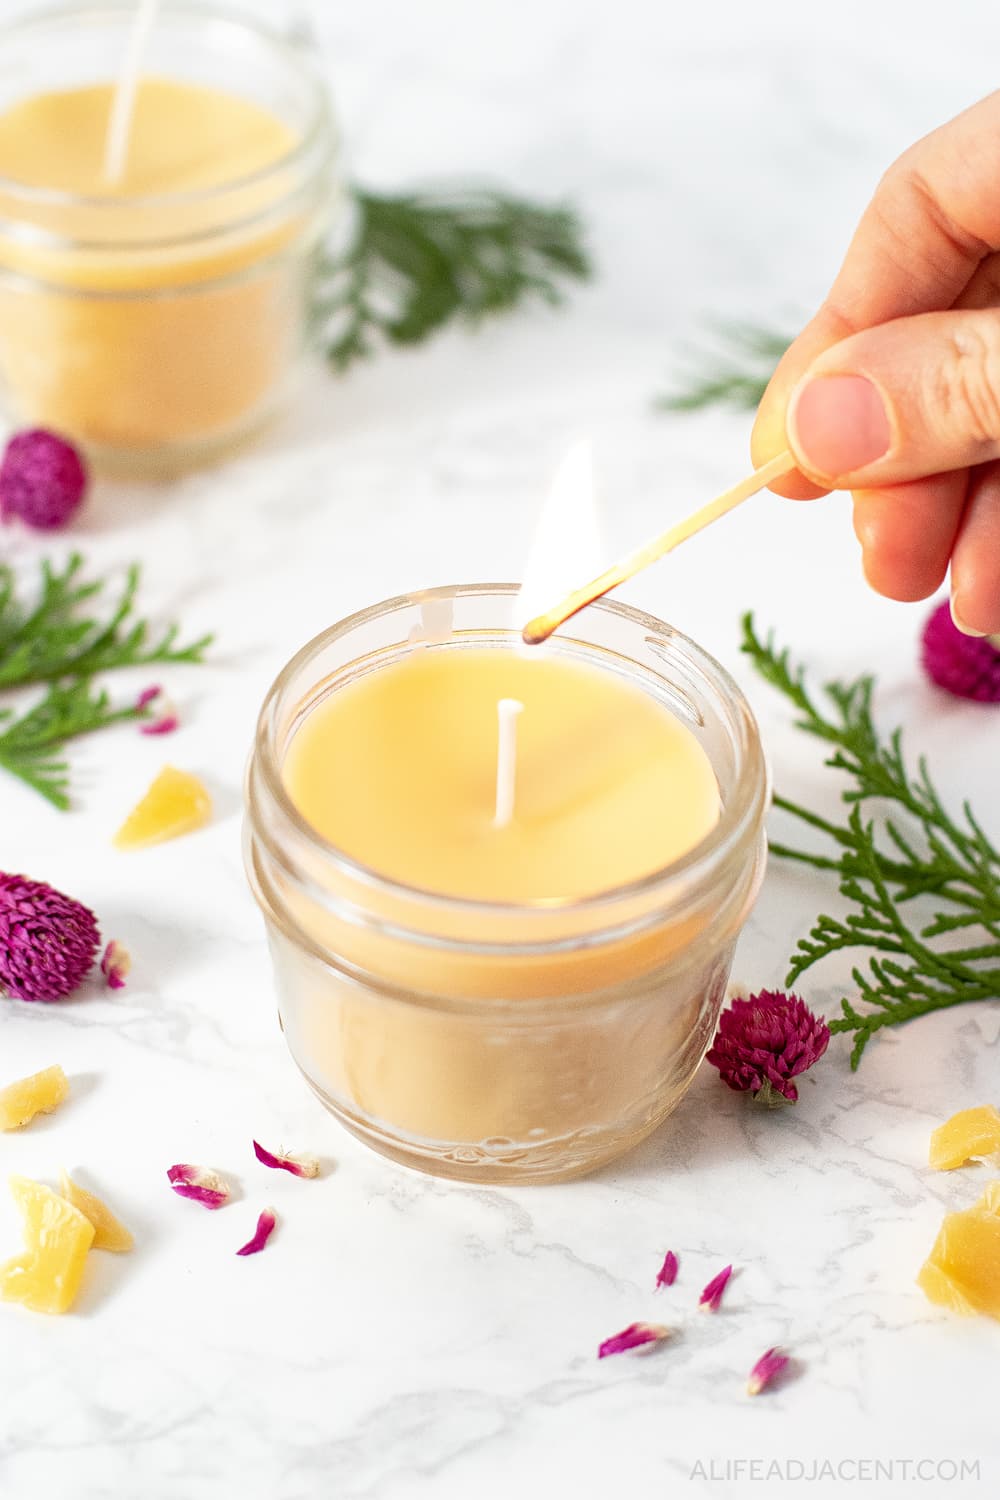 DIY Fall Candles with Essential Oils (7 Recipes) - A Life Adjacent